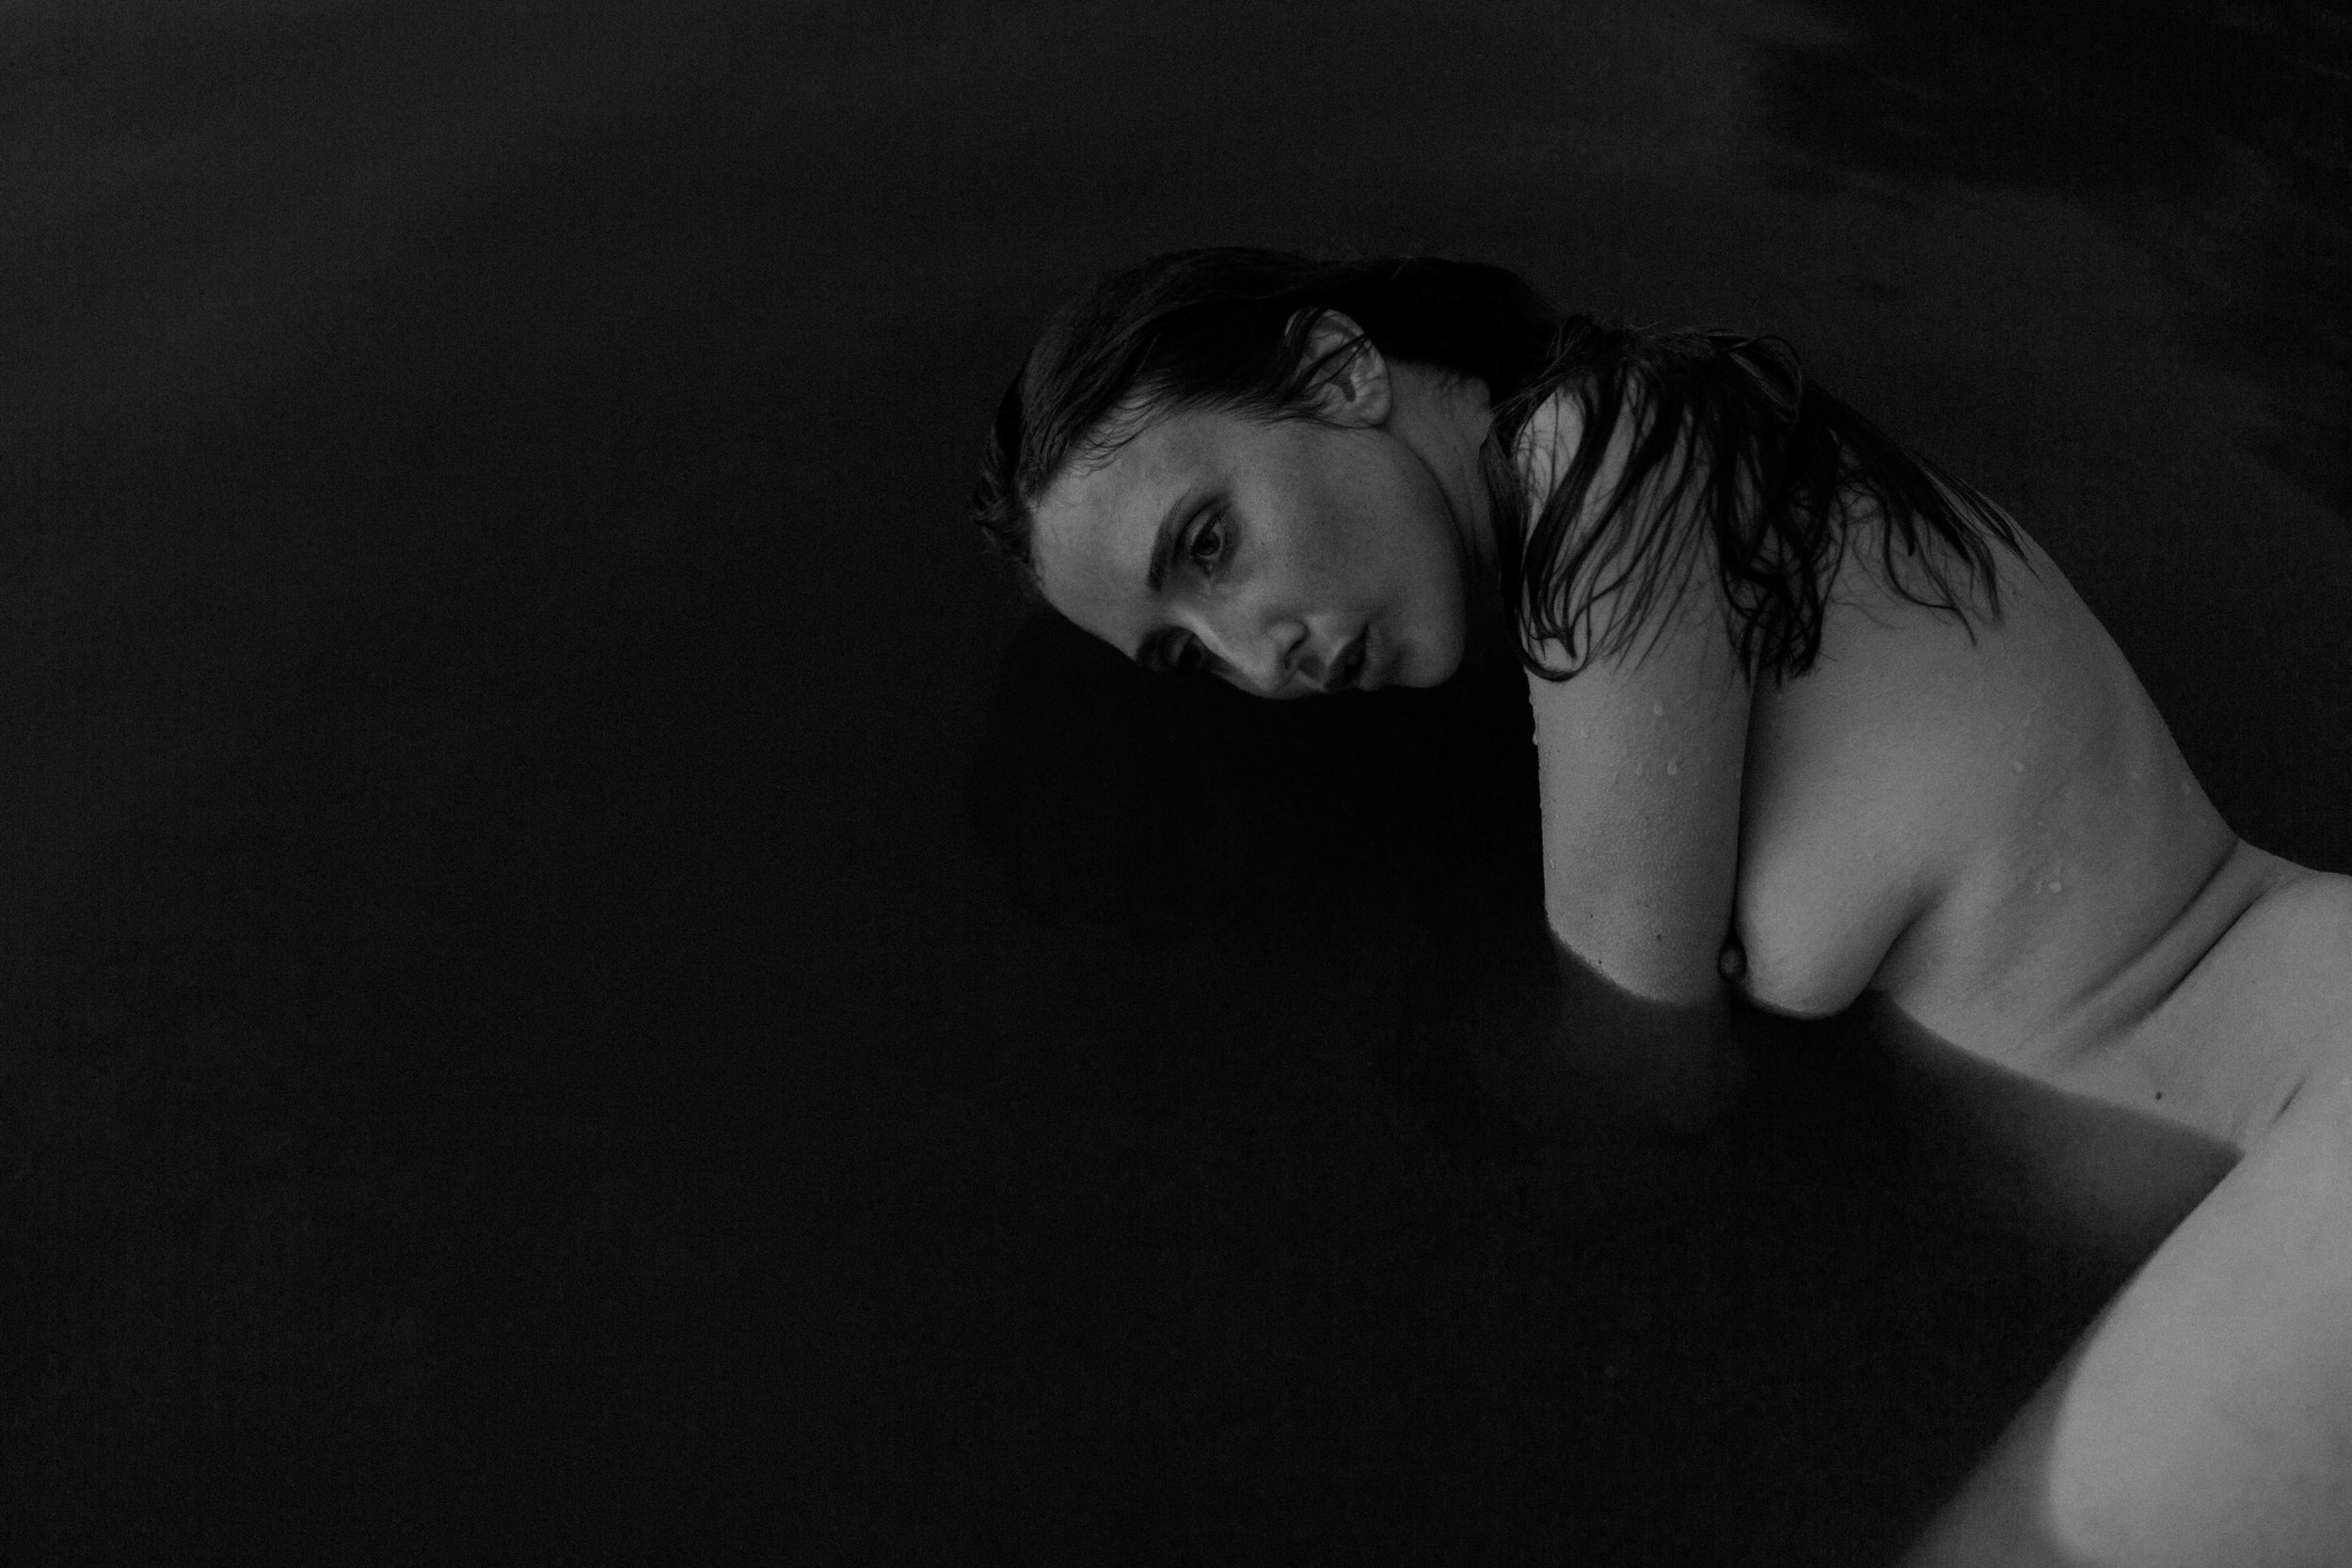 outdoor intimate portrait. black and white. boudoir inspiration. underwater nude. underwater boudoir. art model. anoushanou. ohio boudoir photographer. sarah rose photography. i am sarah rose.